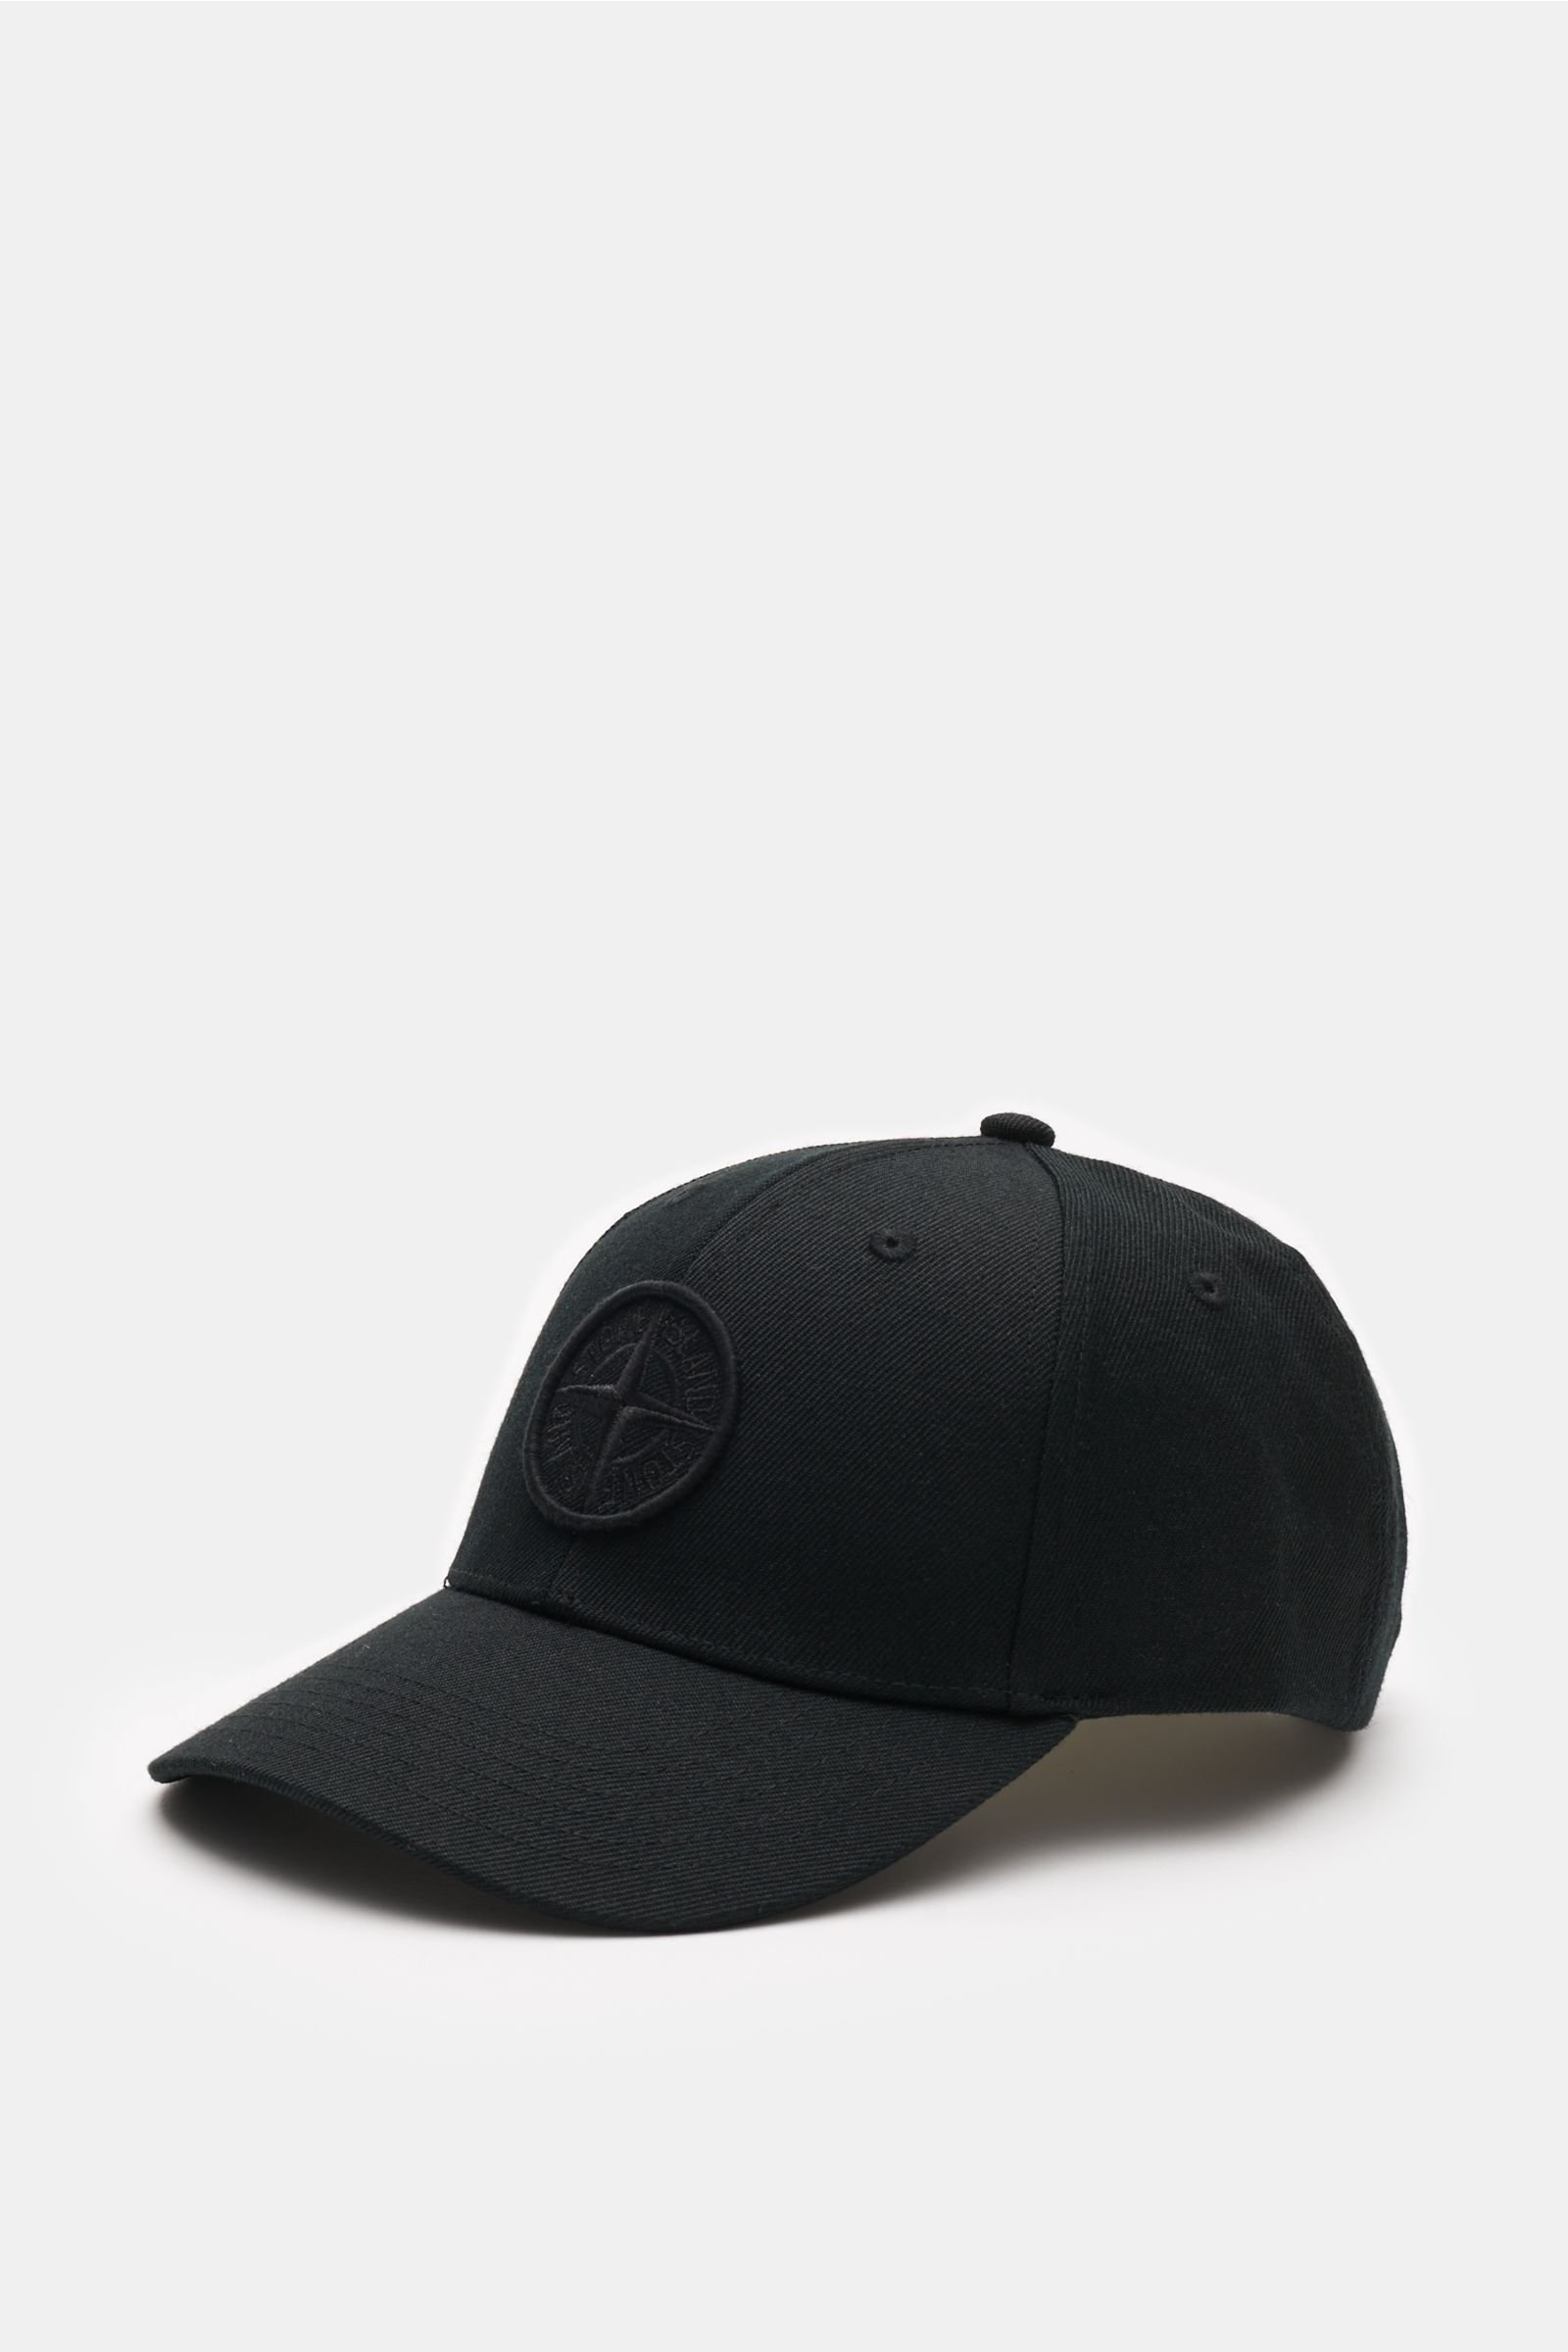 STONE ISLAND baseball cap black | BRAUN Hamburg